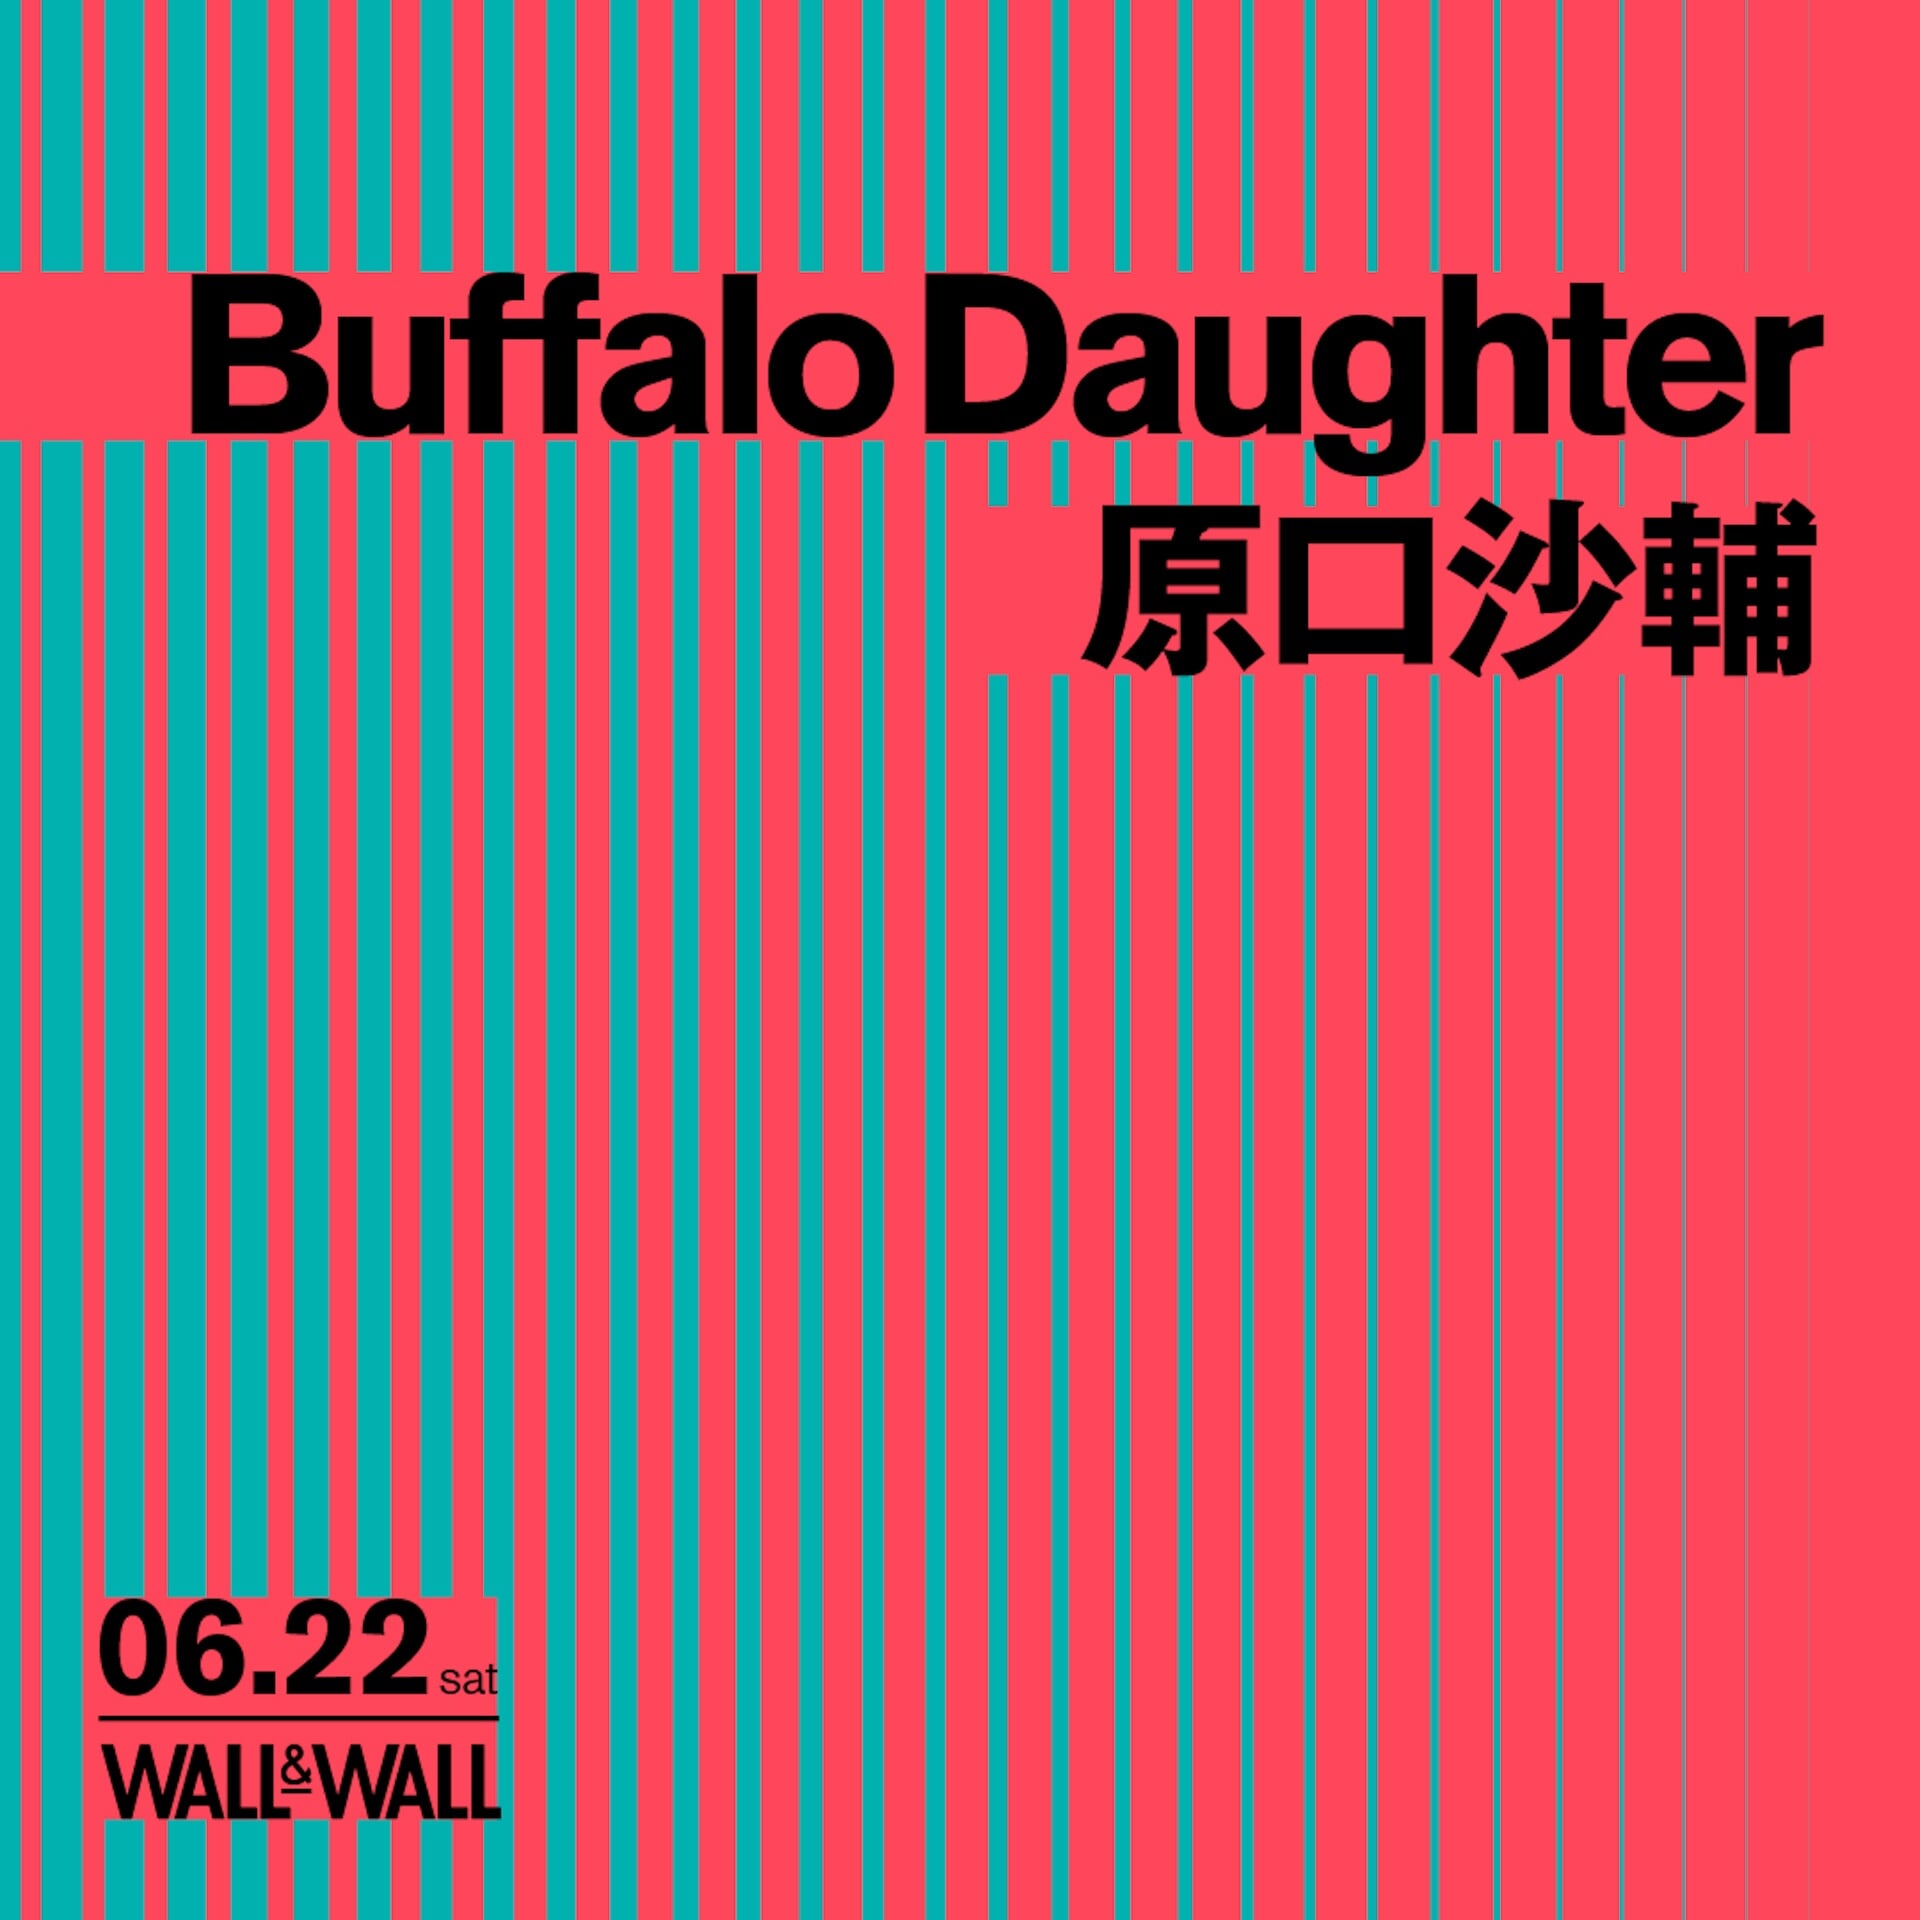 Buffalo Daughter x 原口沙輔